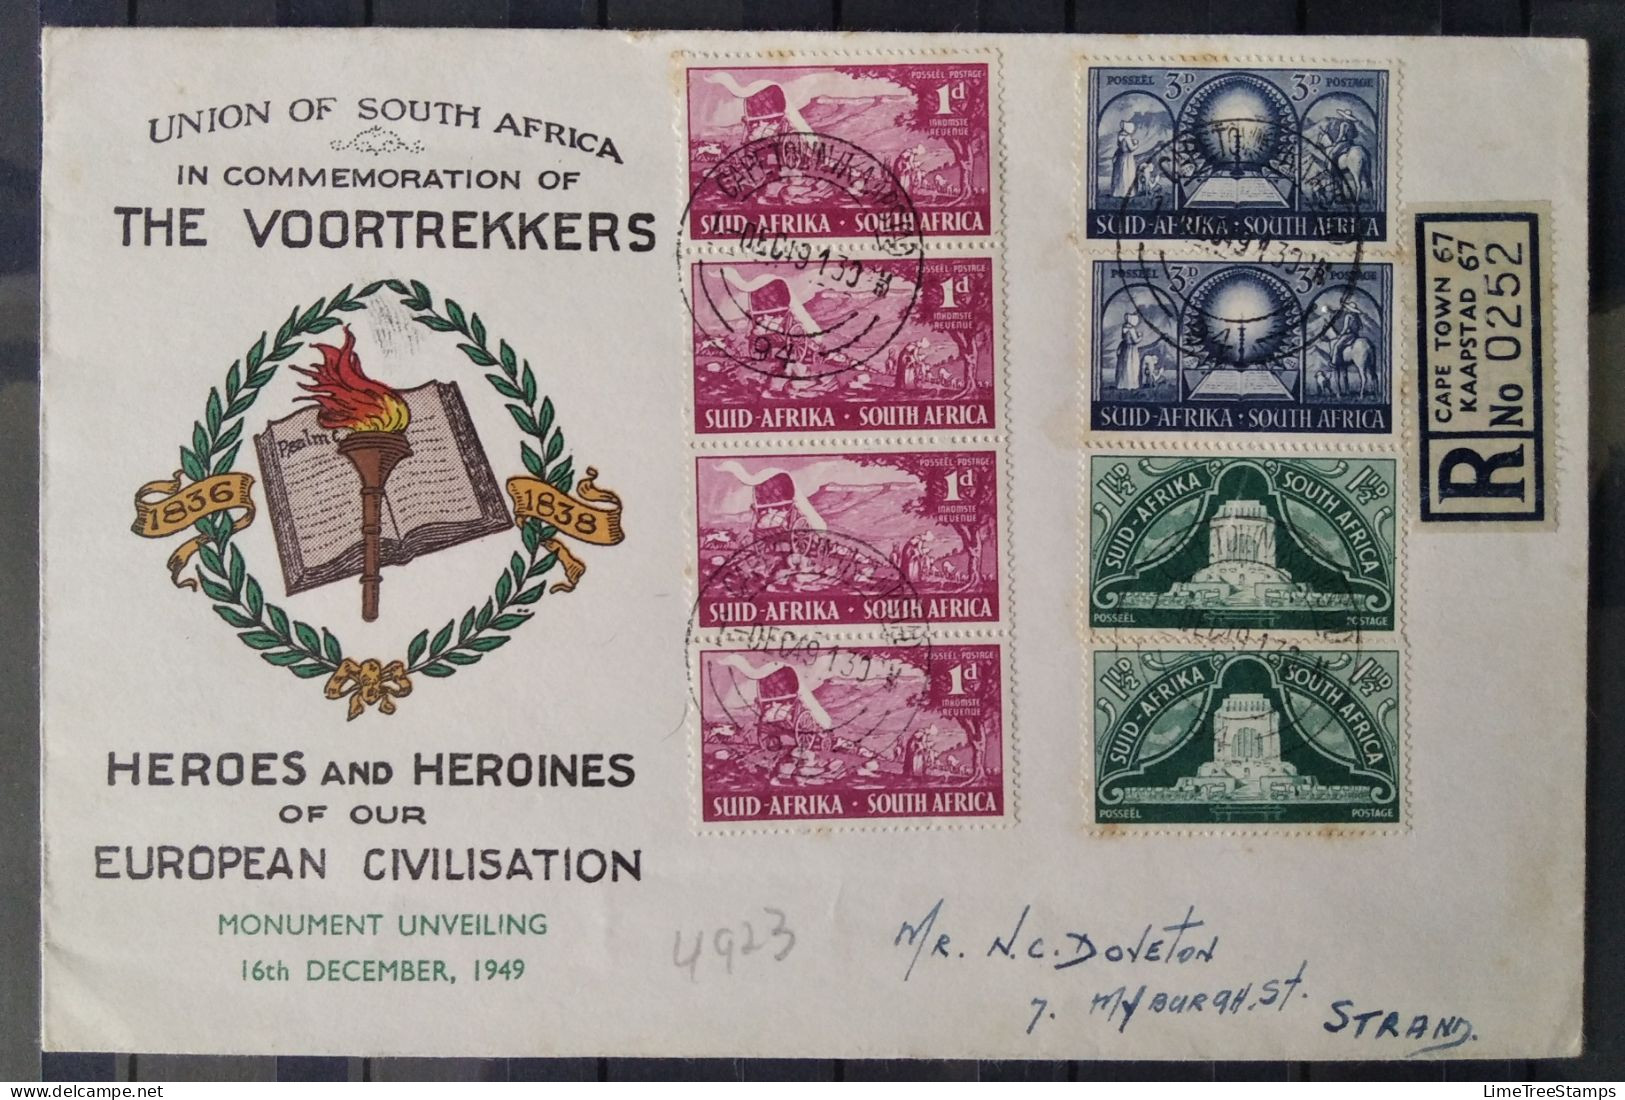 SOUTH AFRICA 1949 Voortrekker Monument Unveiling Registered FDC (01 Dec 1949) - Briefe U. Dokumente